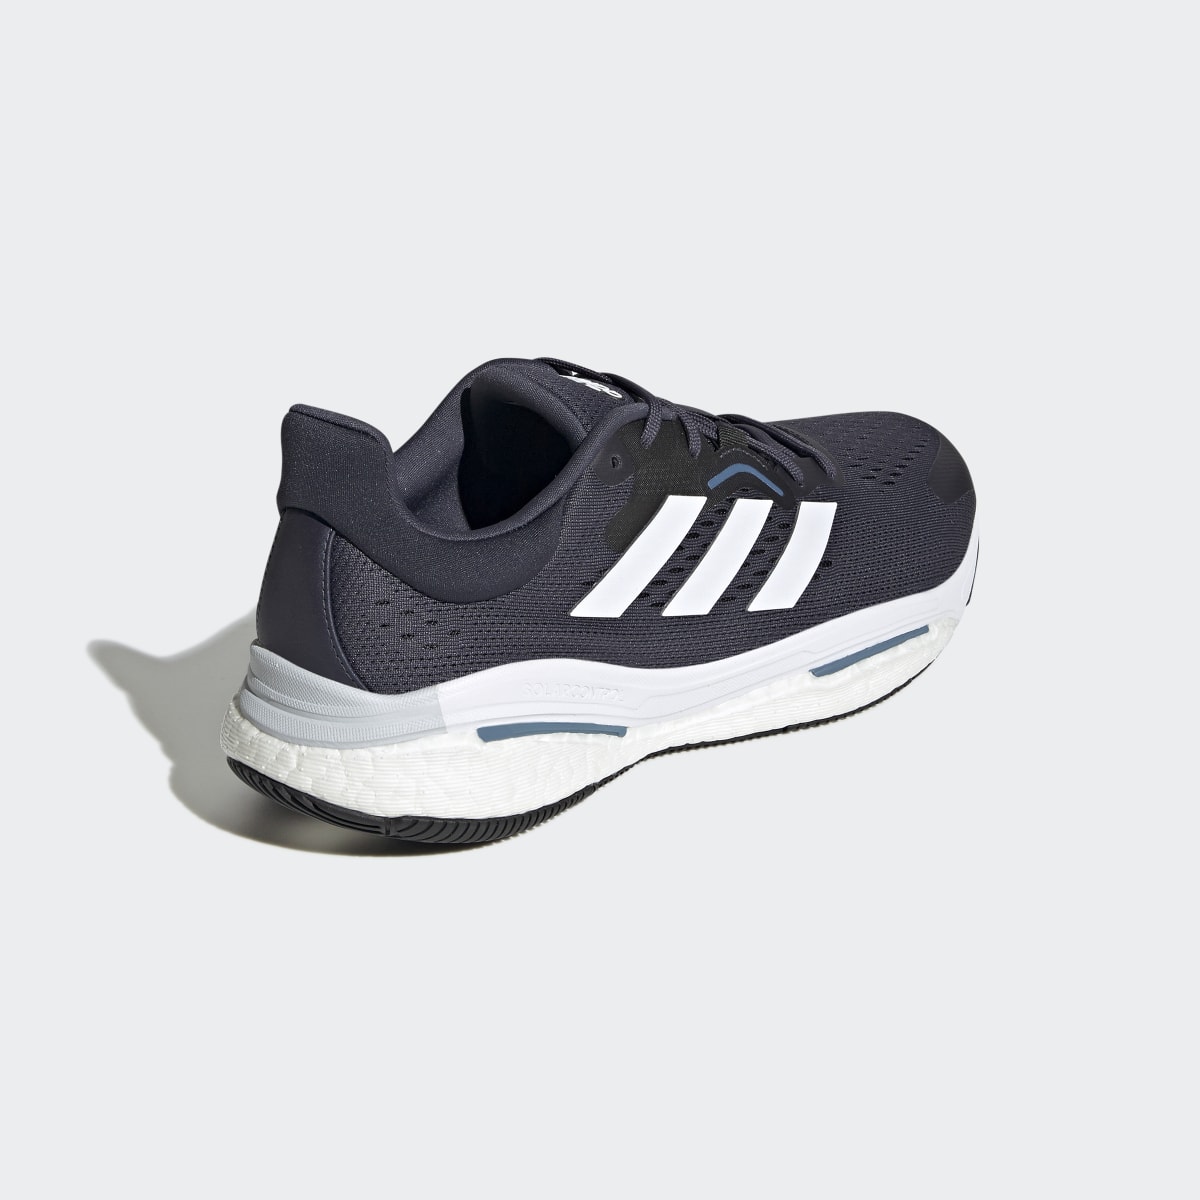 Adidas Solarcontrol Shoes. 6